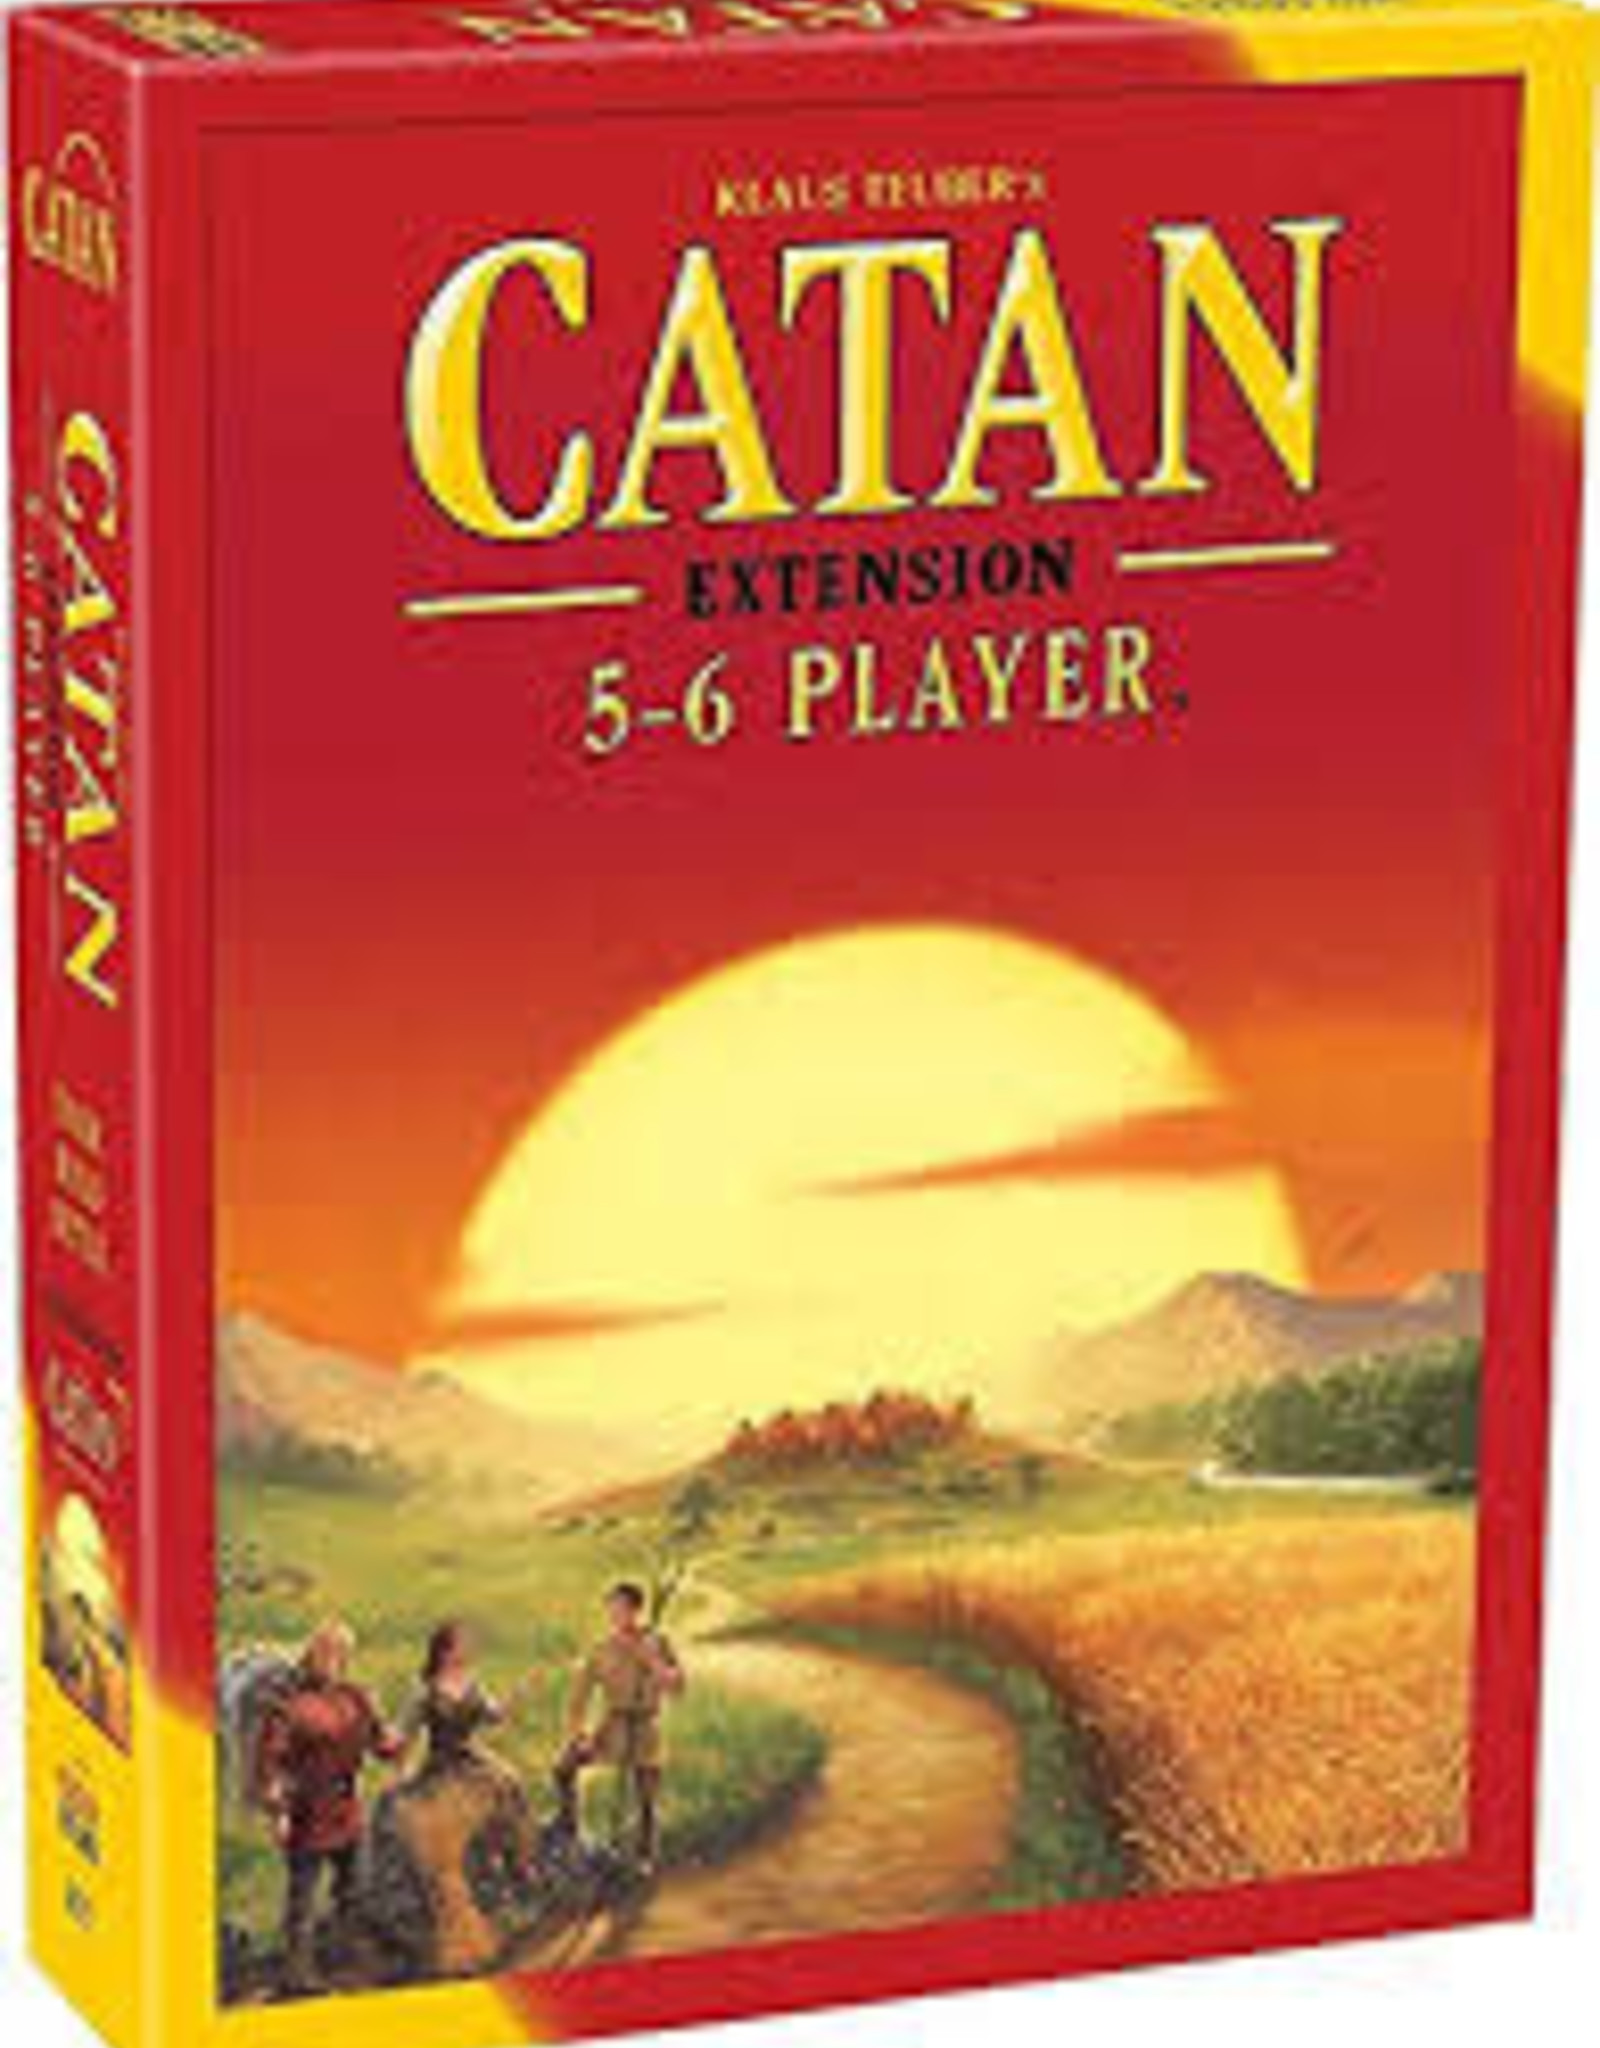 Catan Studio Catan (5-6 Player Extension)